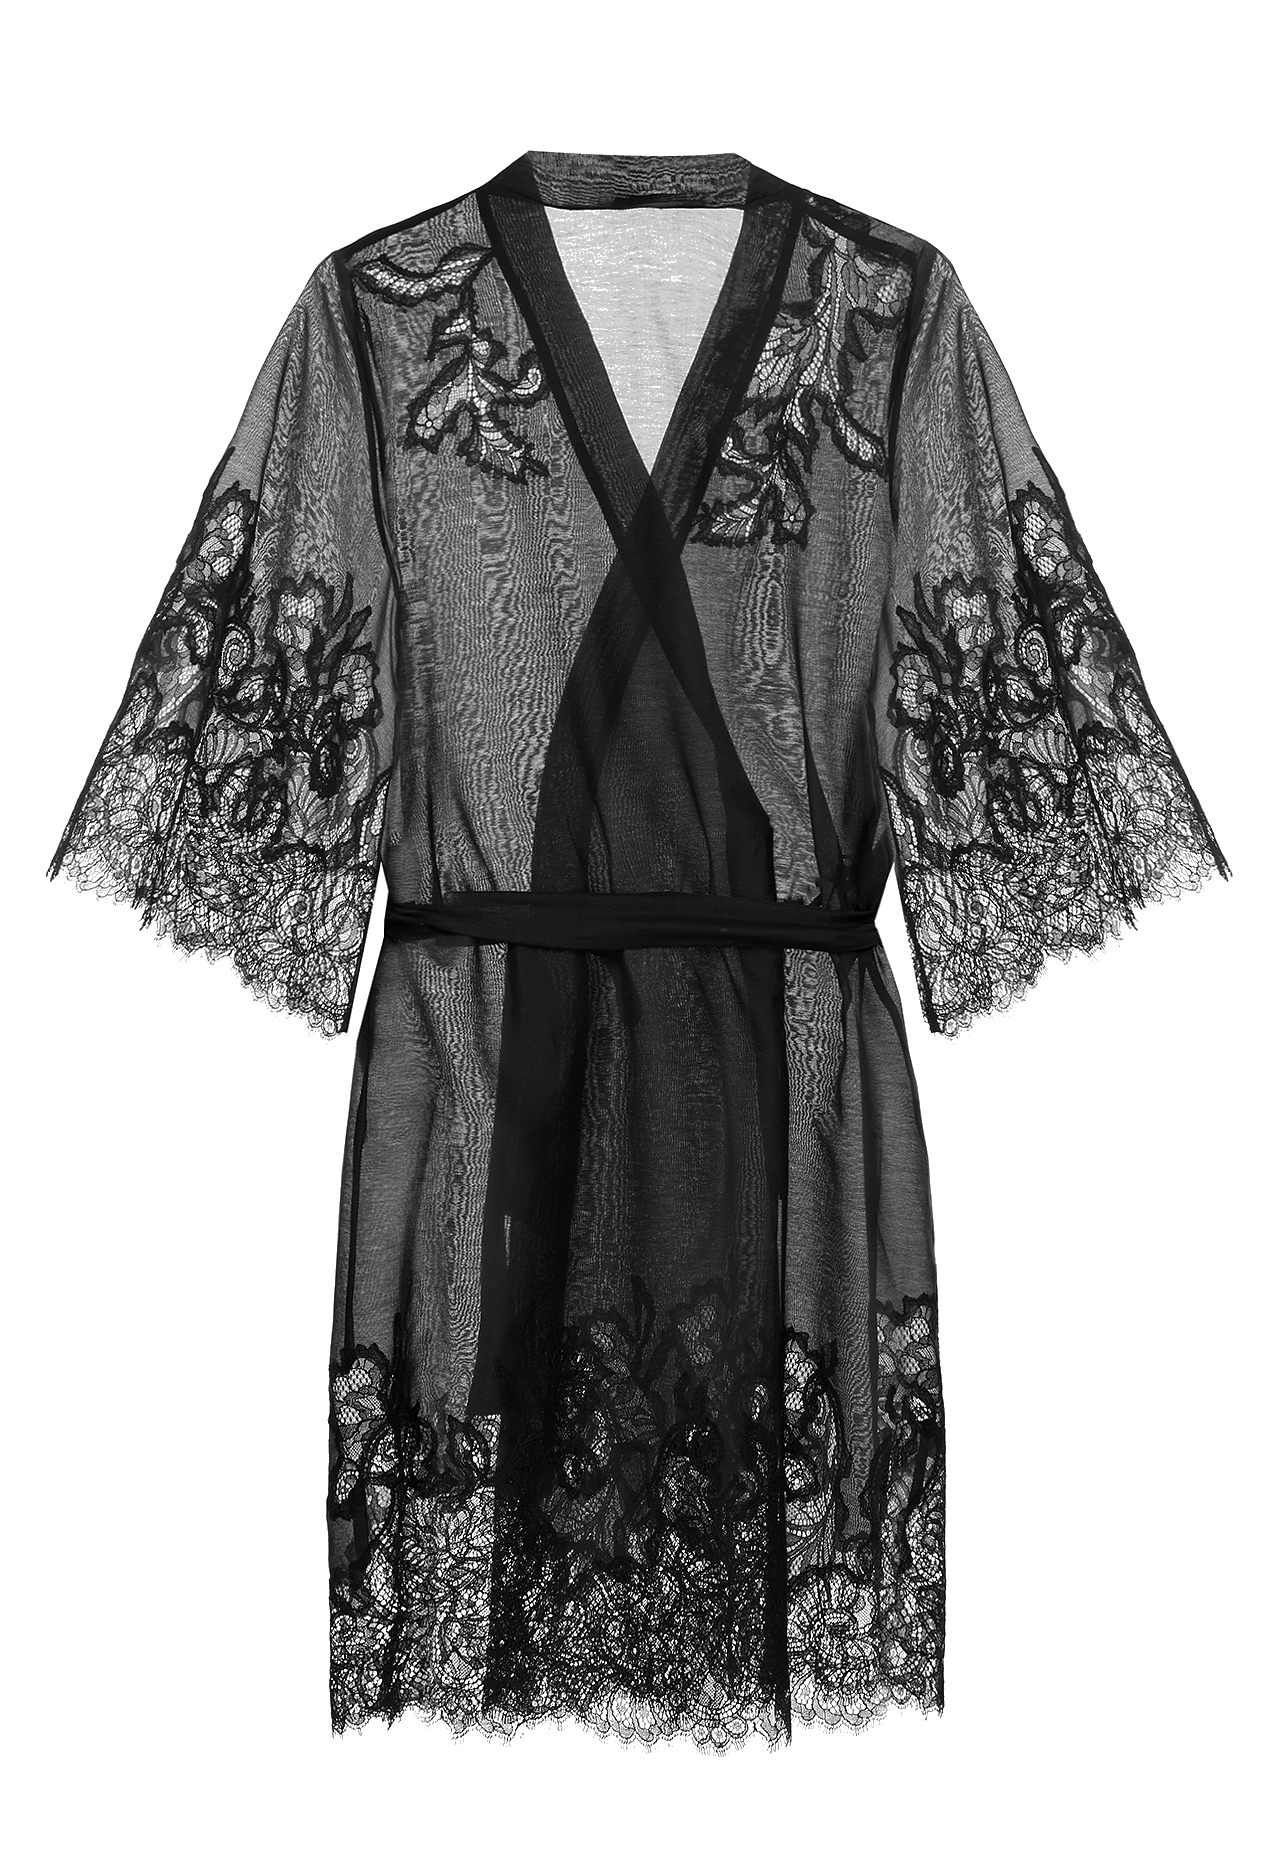 Короткий халат Suavite short-robe-ex400-bl-vanessa